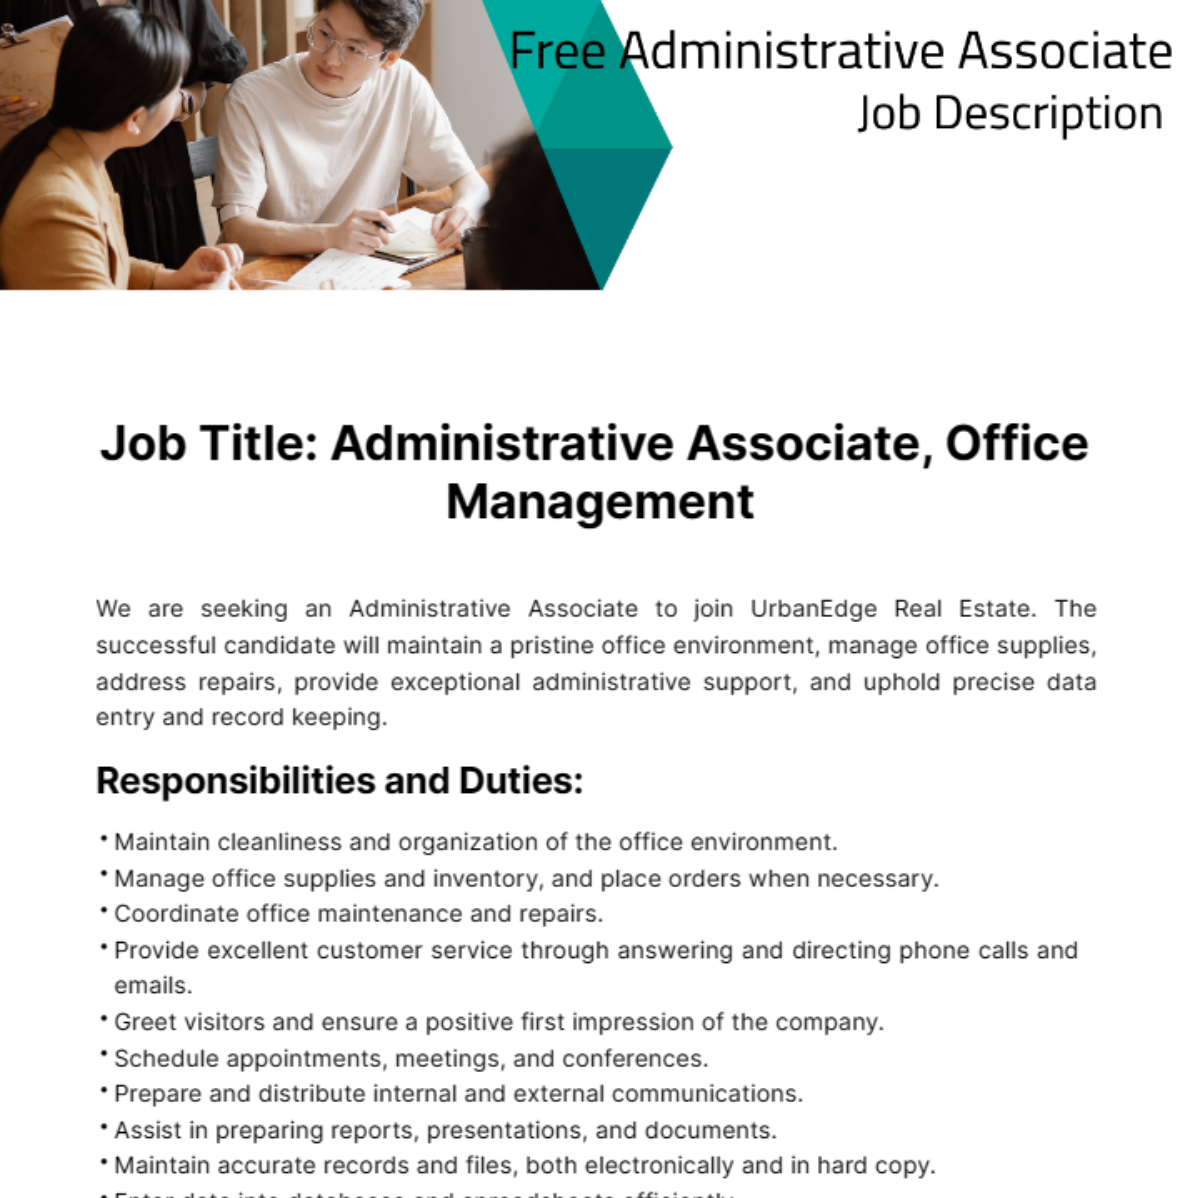 Free Administrative Associate Job Description Template